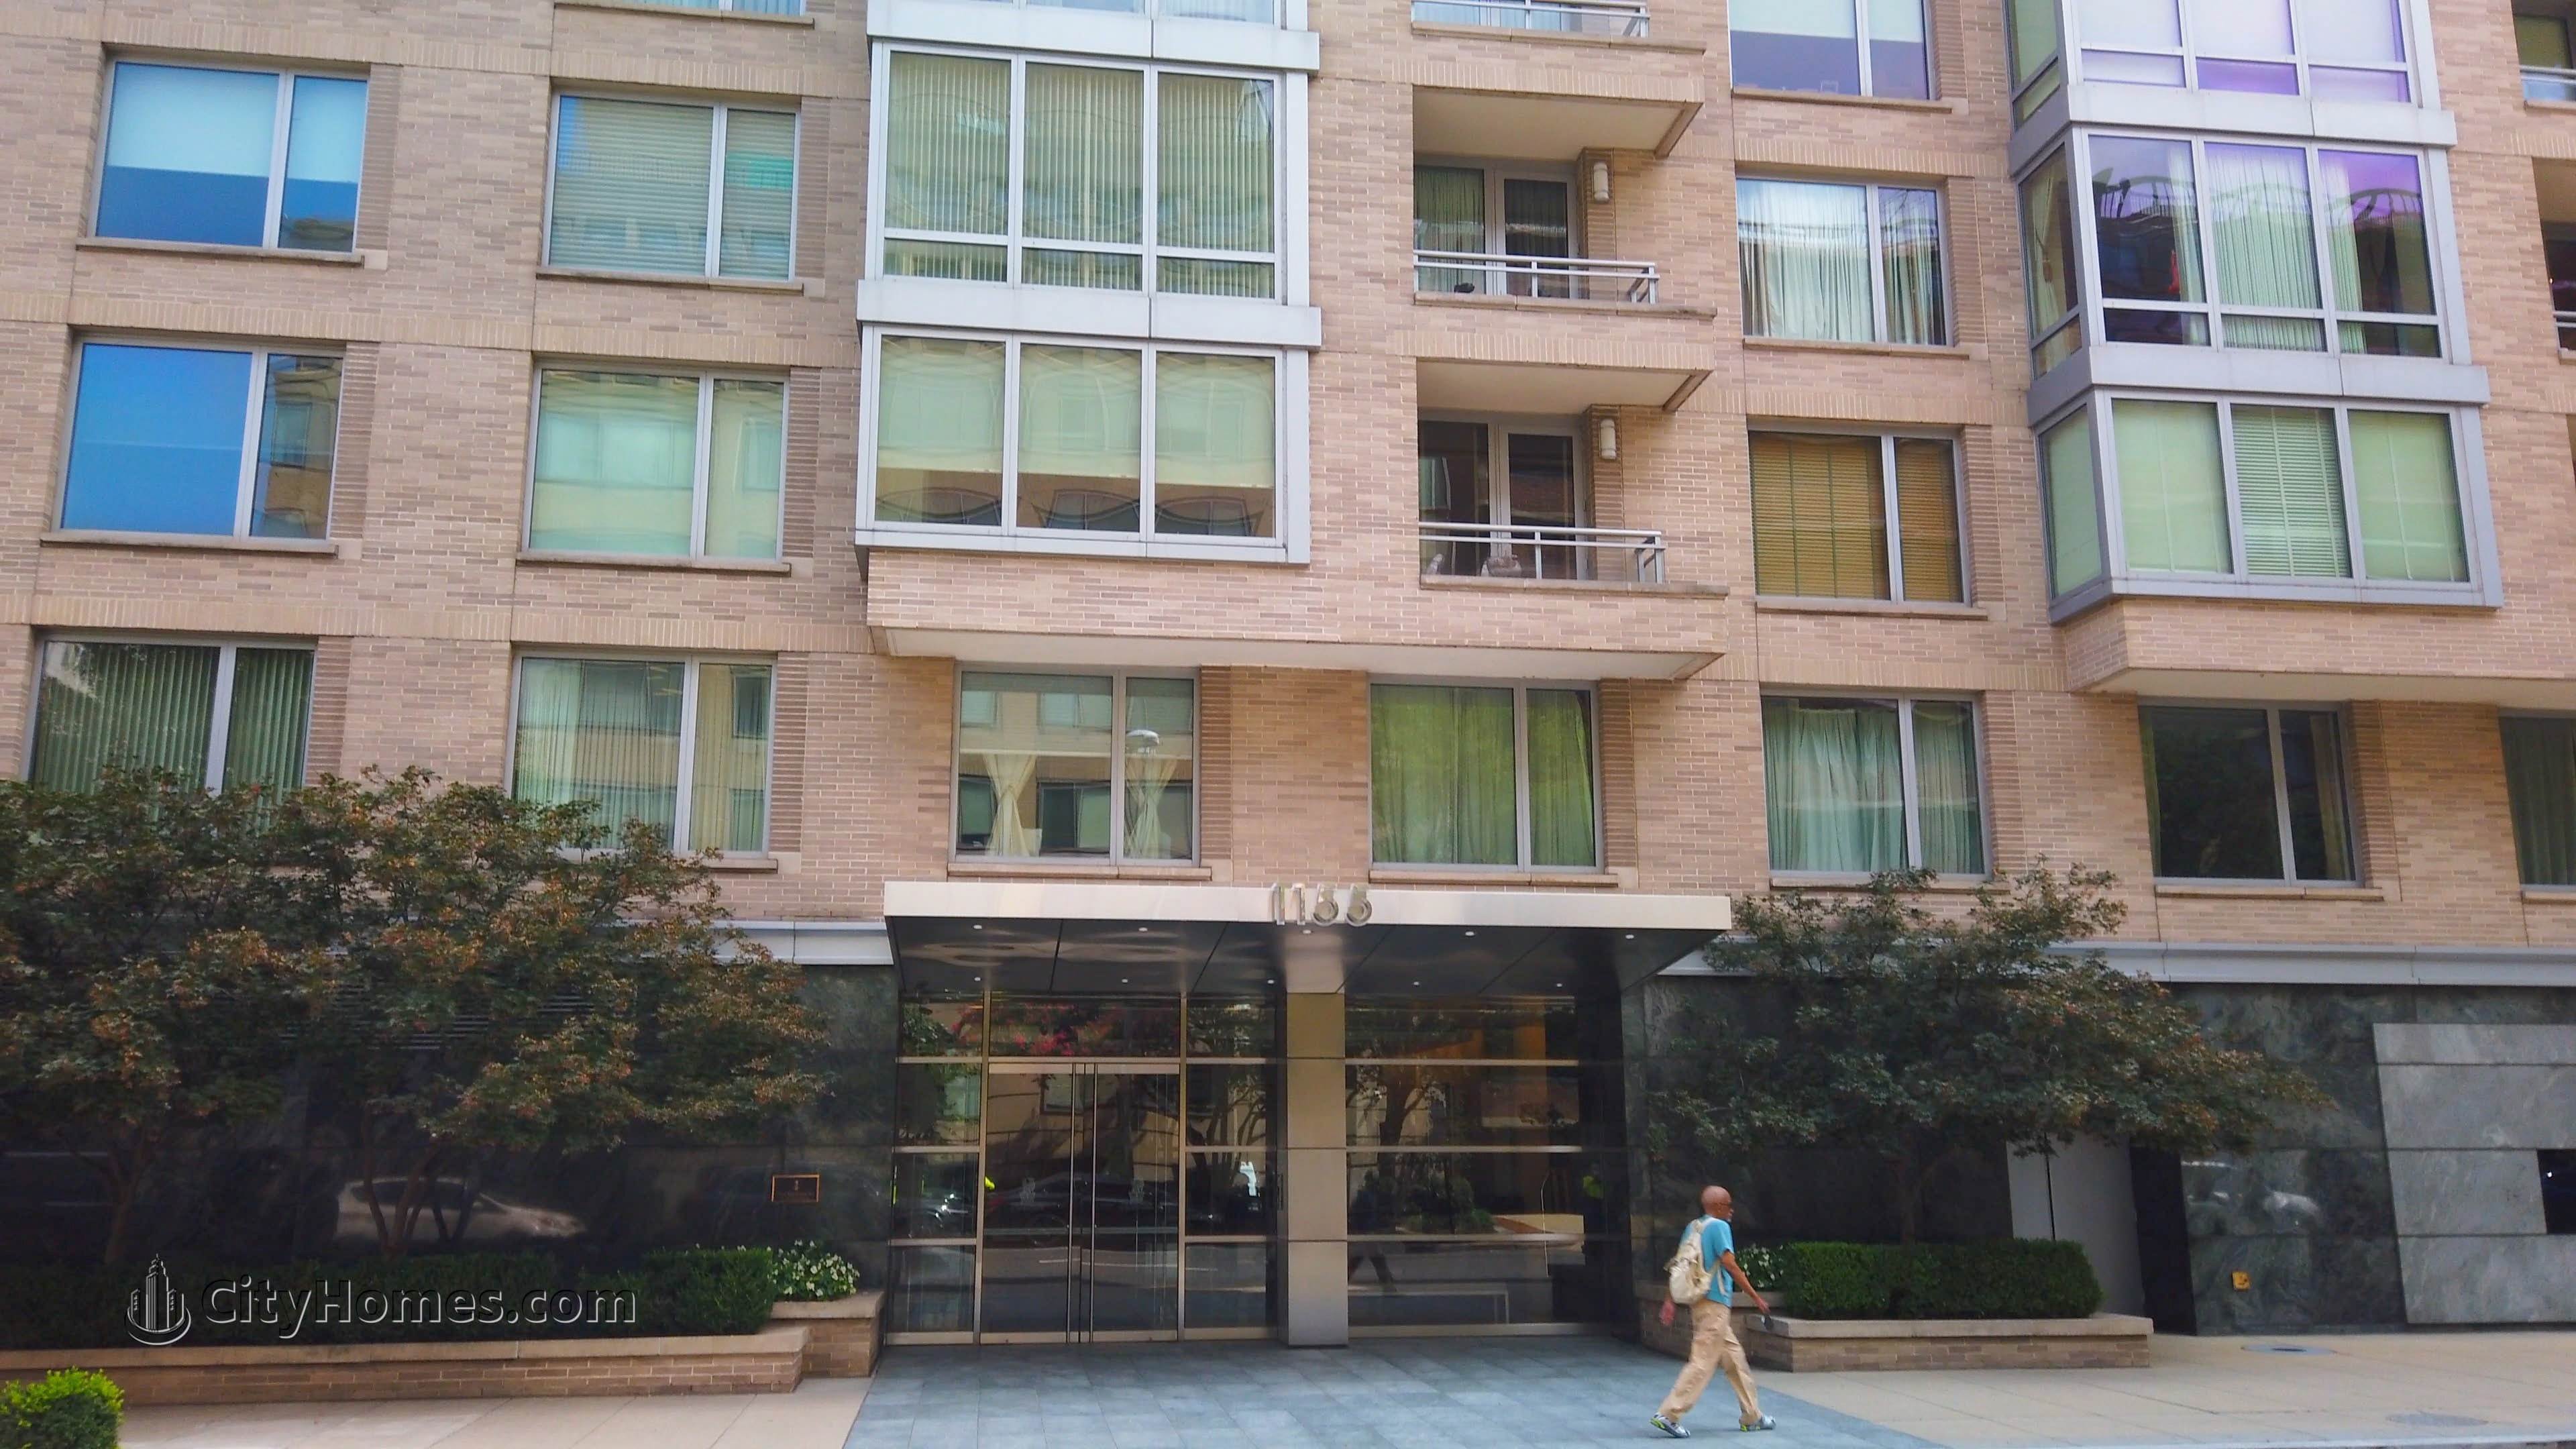 3. The Ritz-Carlton Washington byggnad vid 1111 & 1155 23rd Street NW, West End, Washington, DC 20037